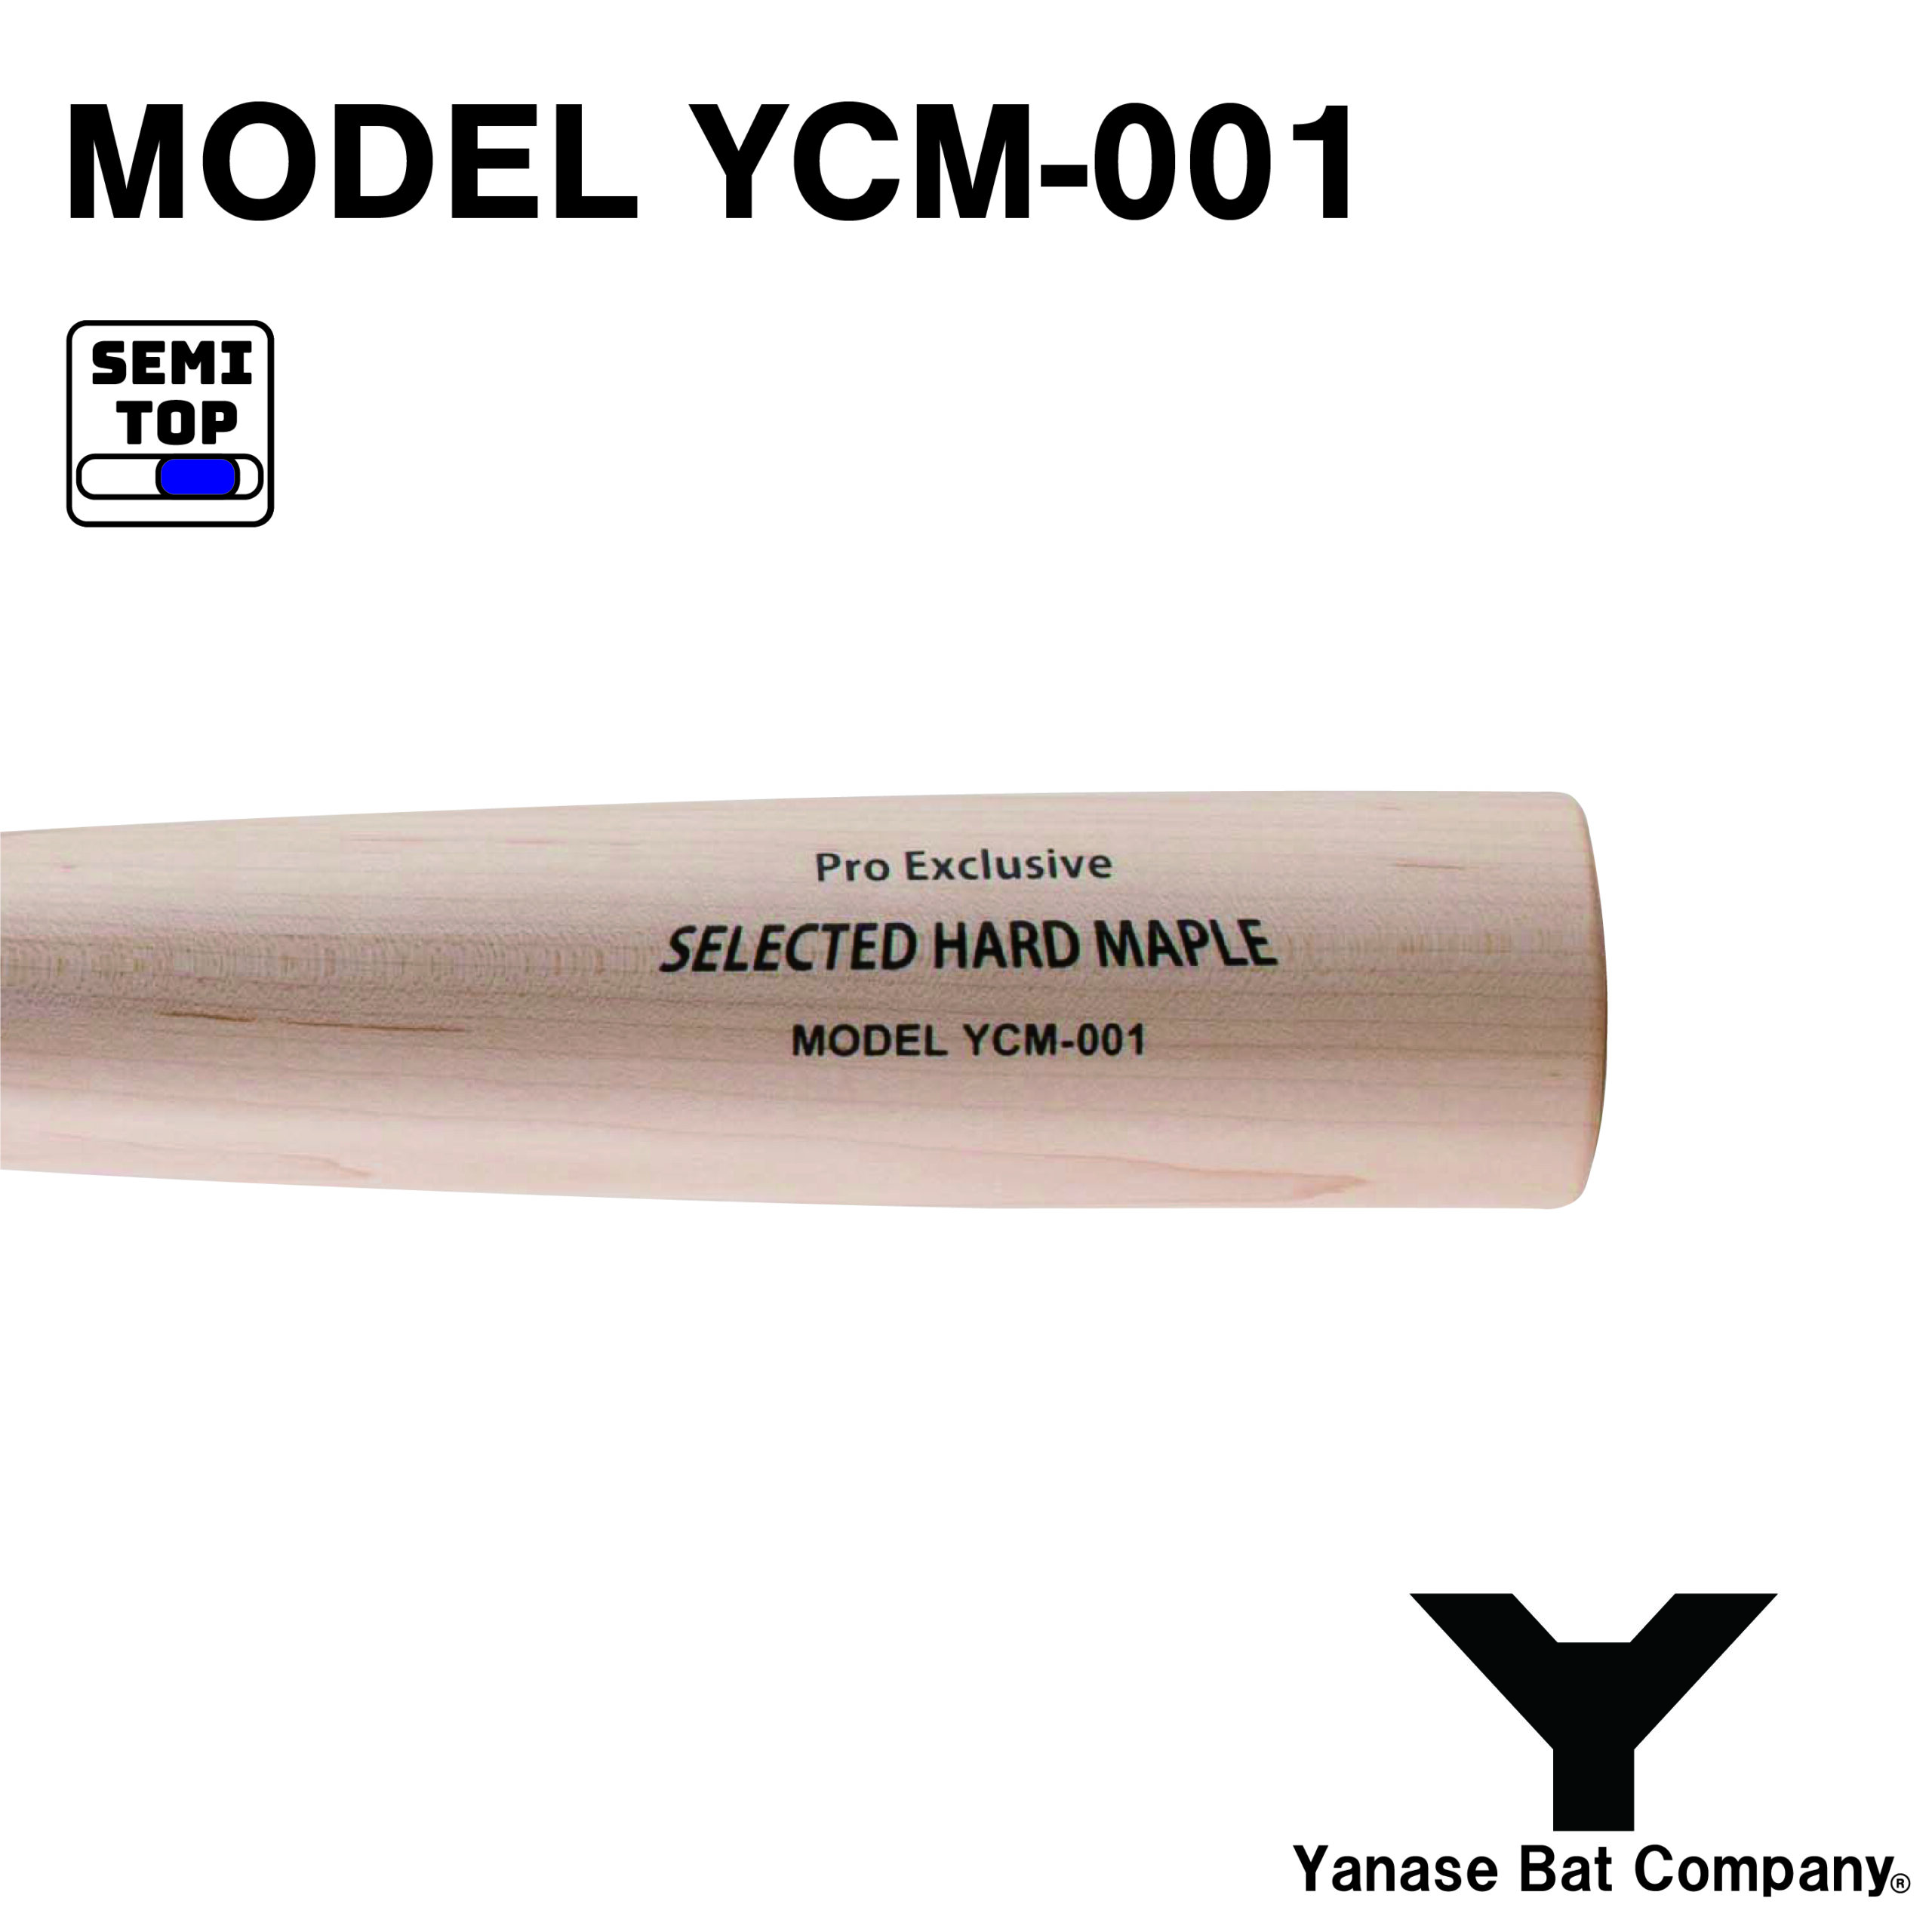 YCM-001 - YANASE BAT COMPANY